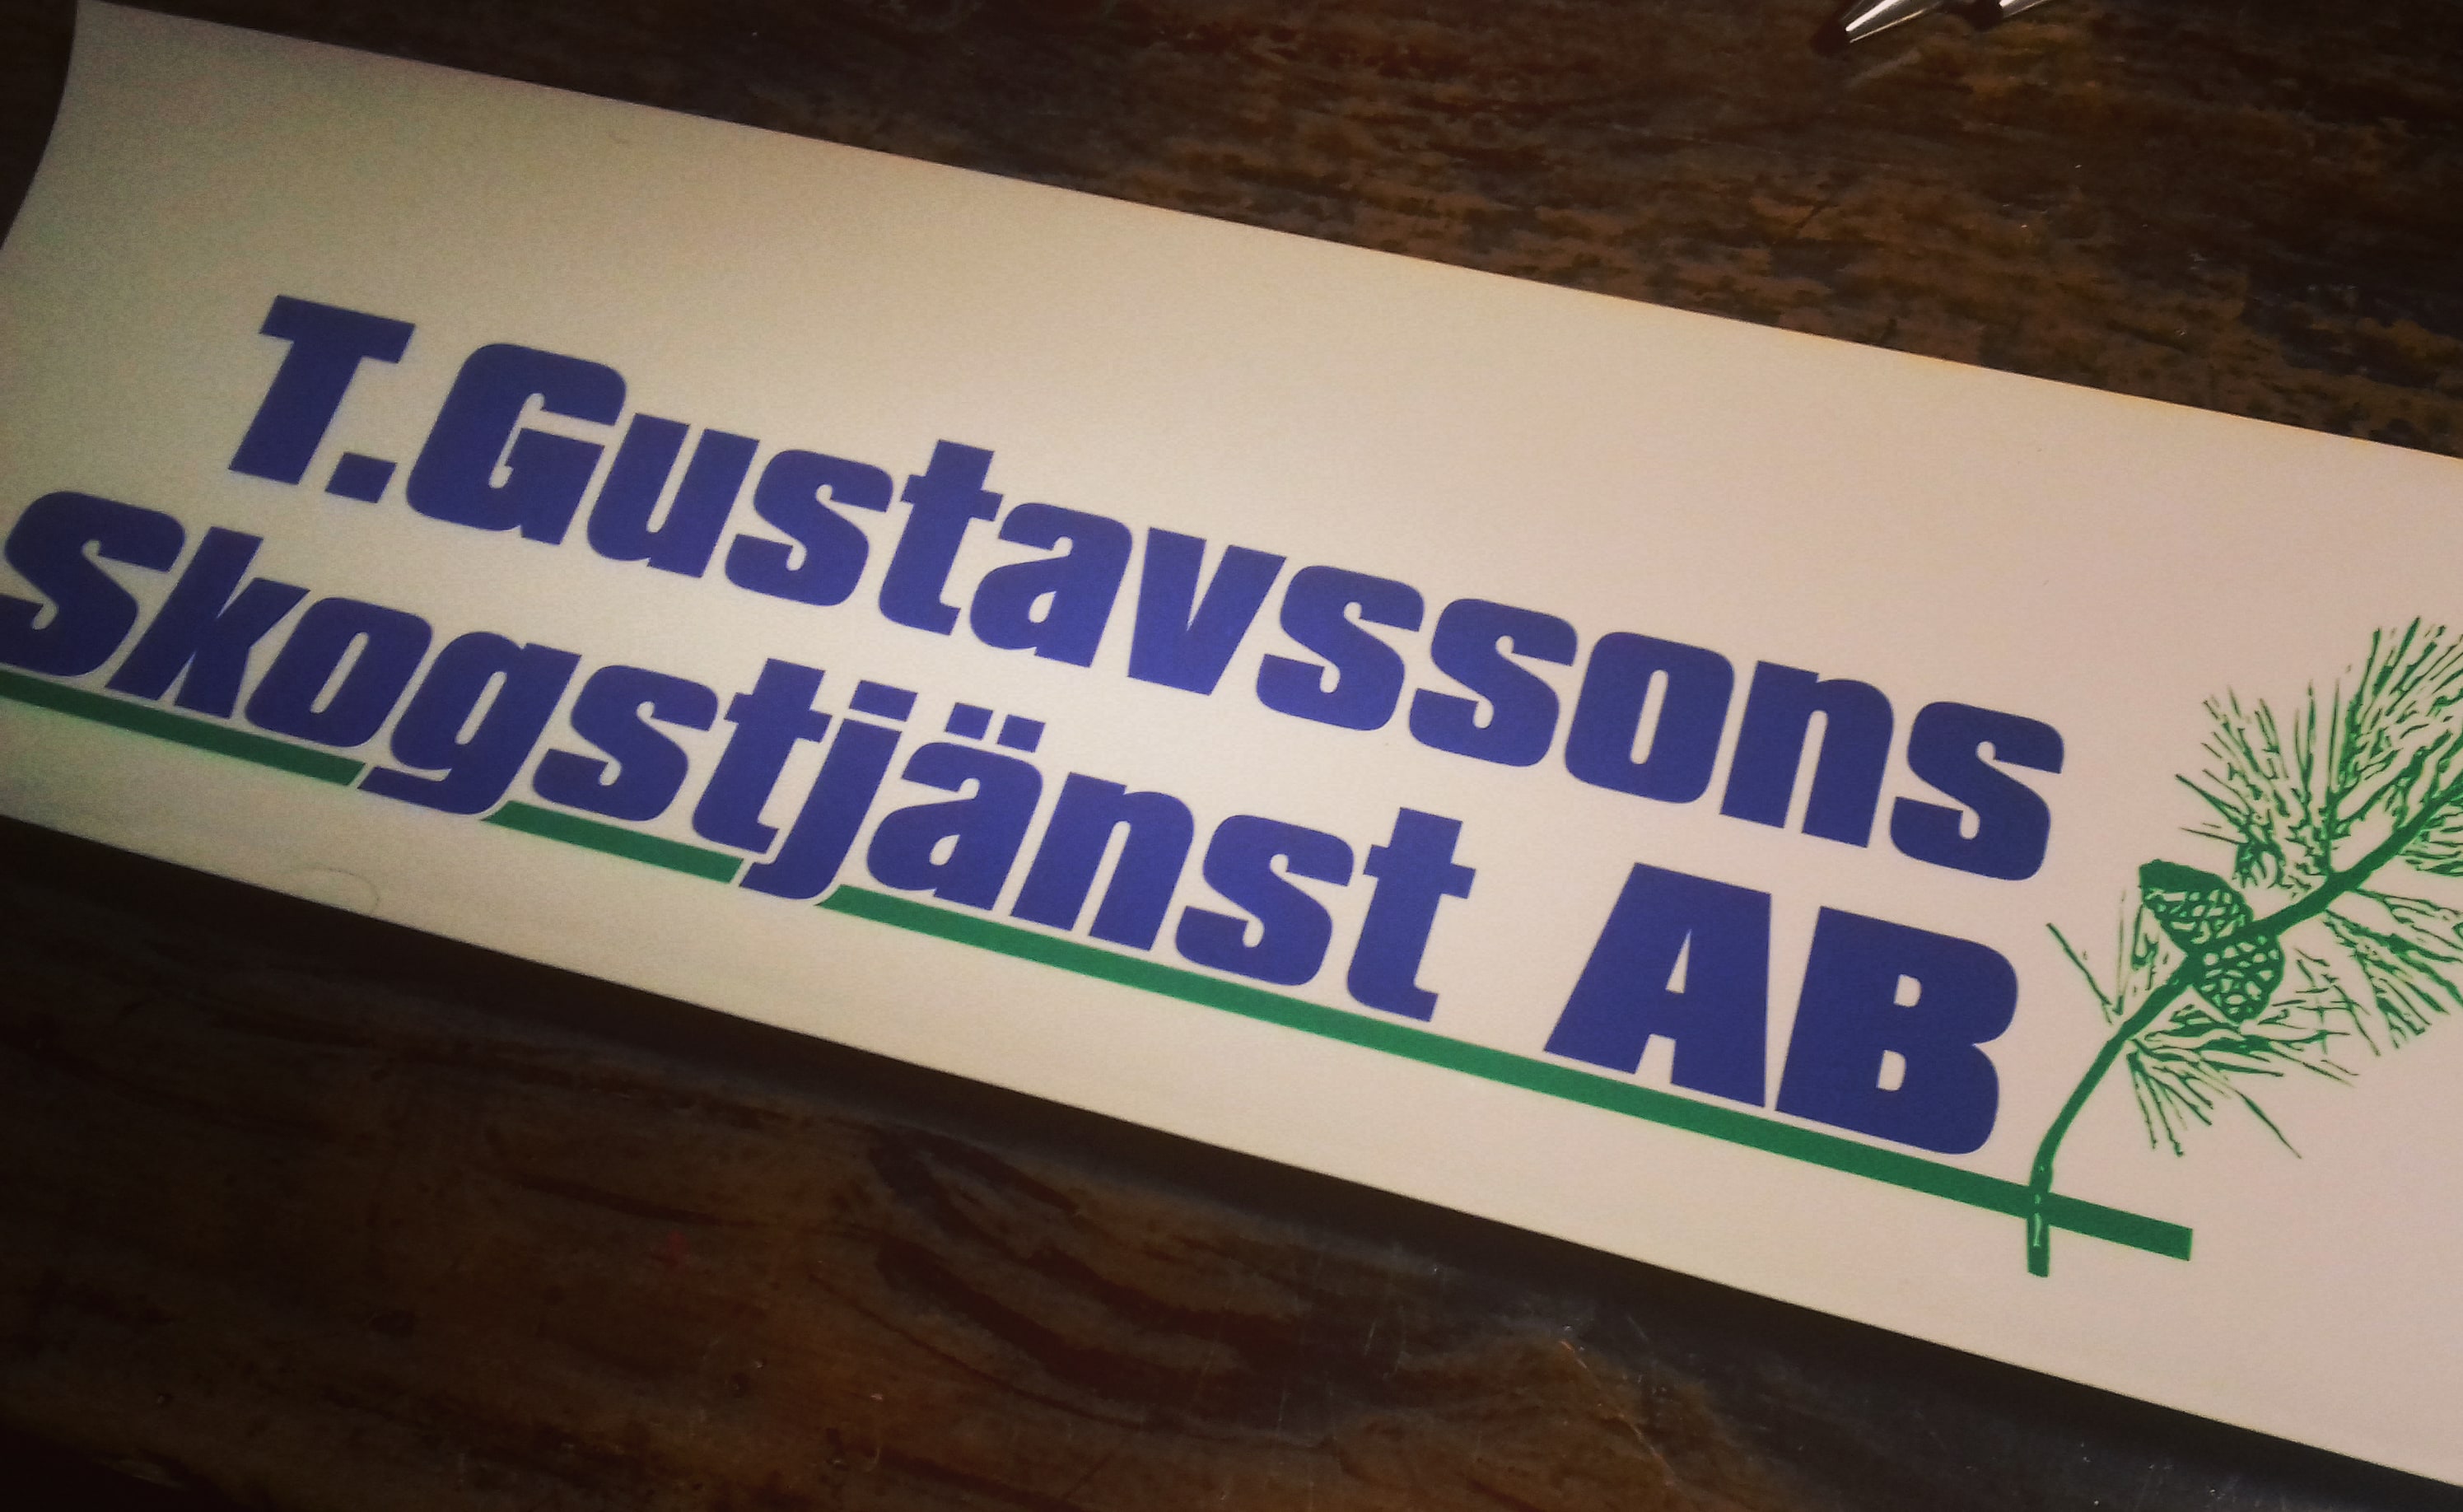 T.Gustavsson Skogstjnst AB